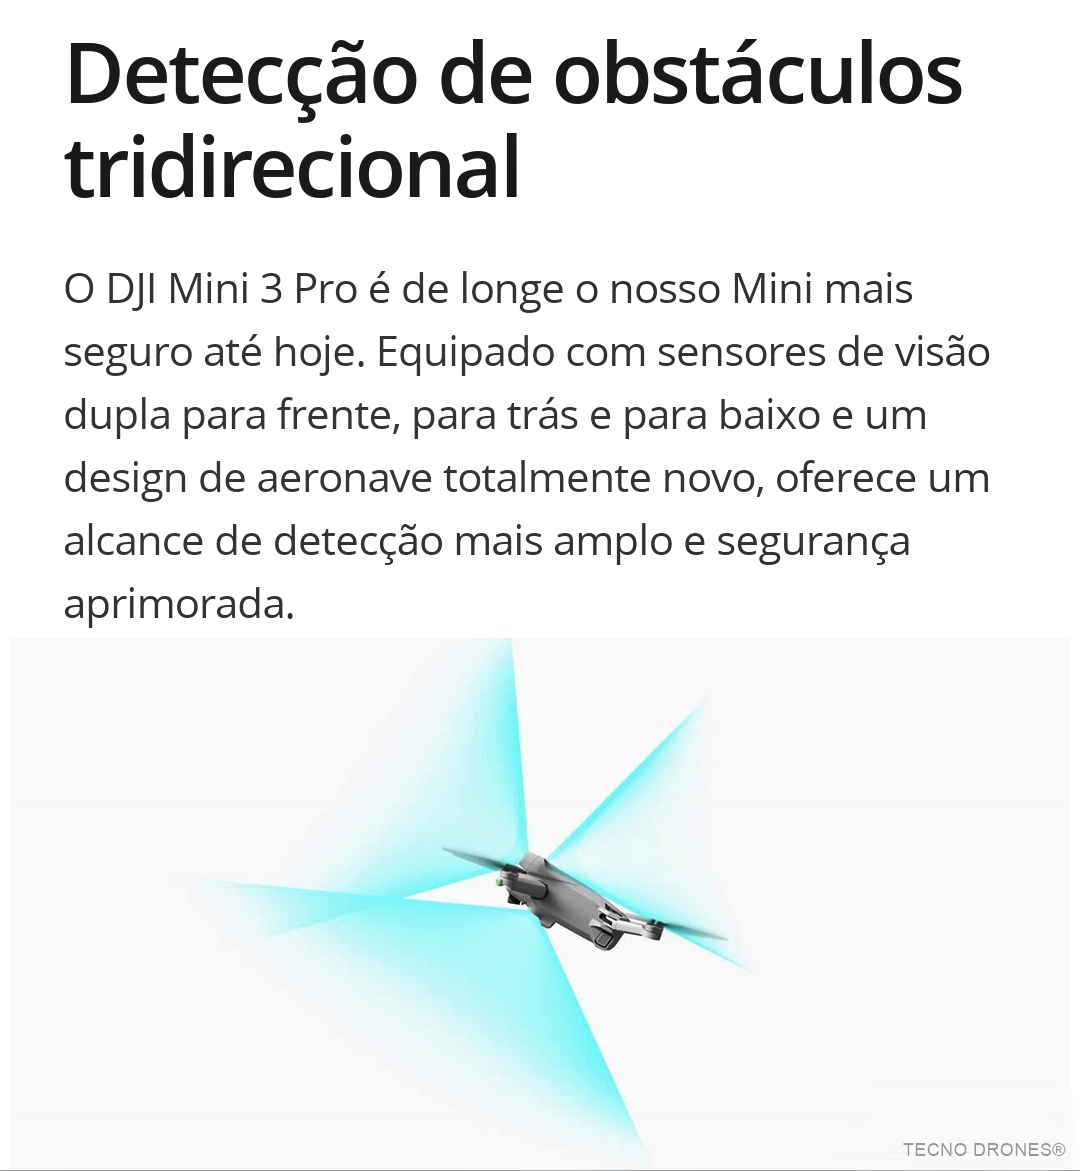 Drone Dji Mini 3 Pro Fly More Kit (DJI RC)